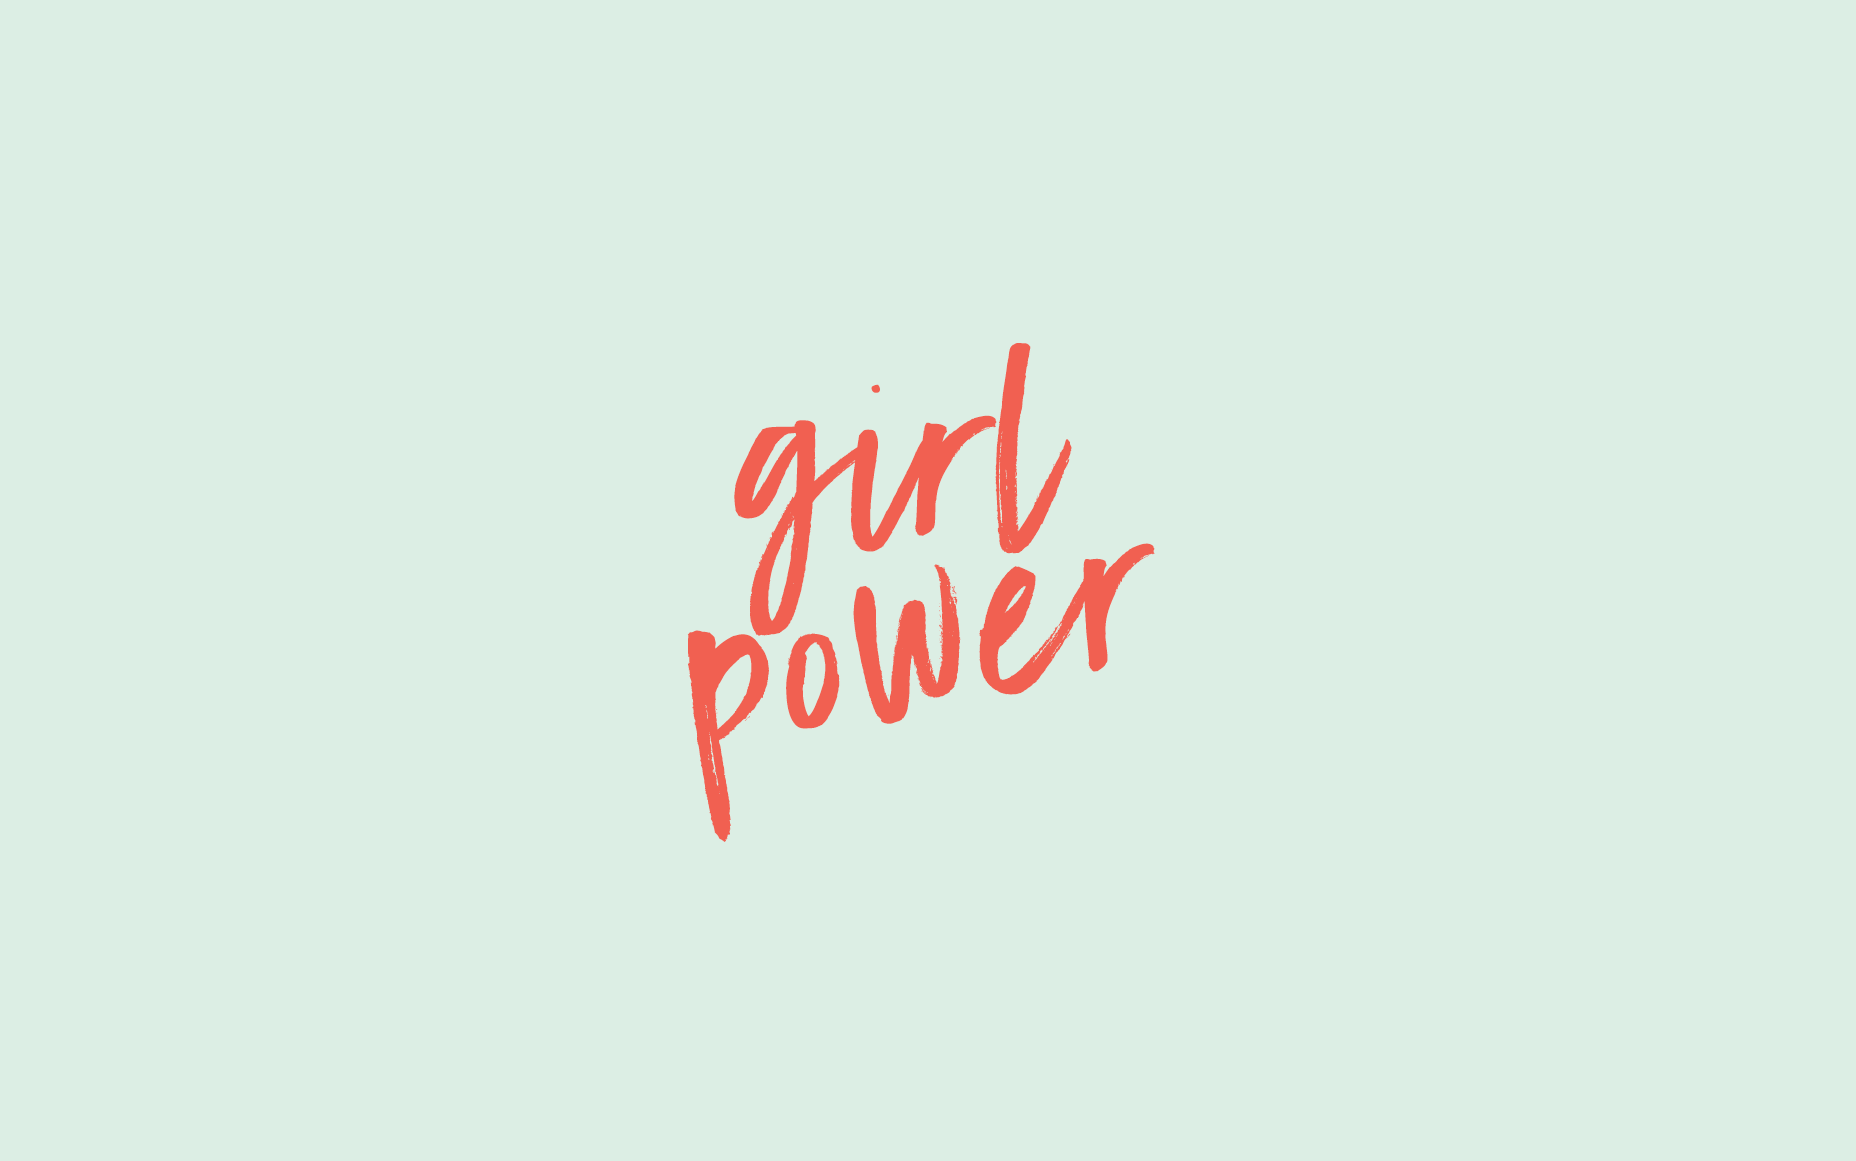 wallpaper✨ - girl power - Wattpad